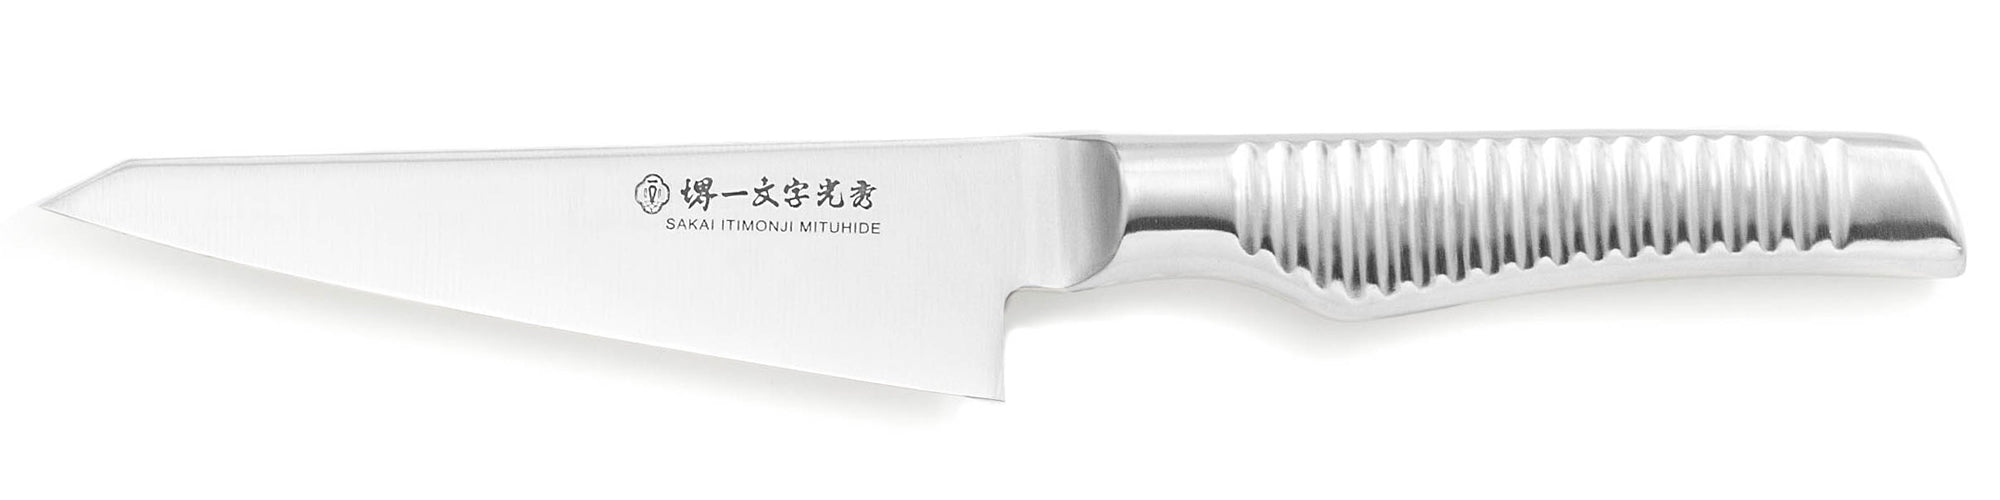 AUS-6 Honesuki kitchen knife with Stainless Steel Handle